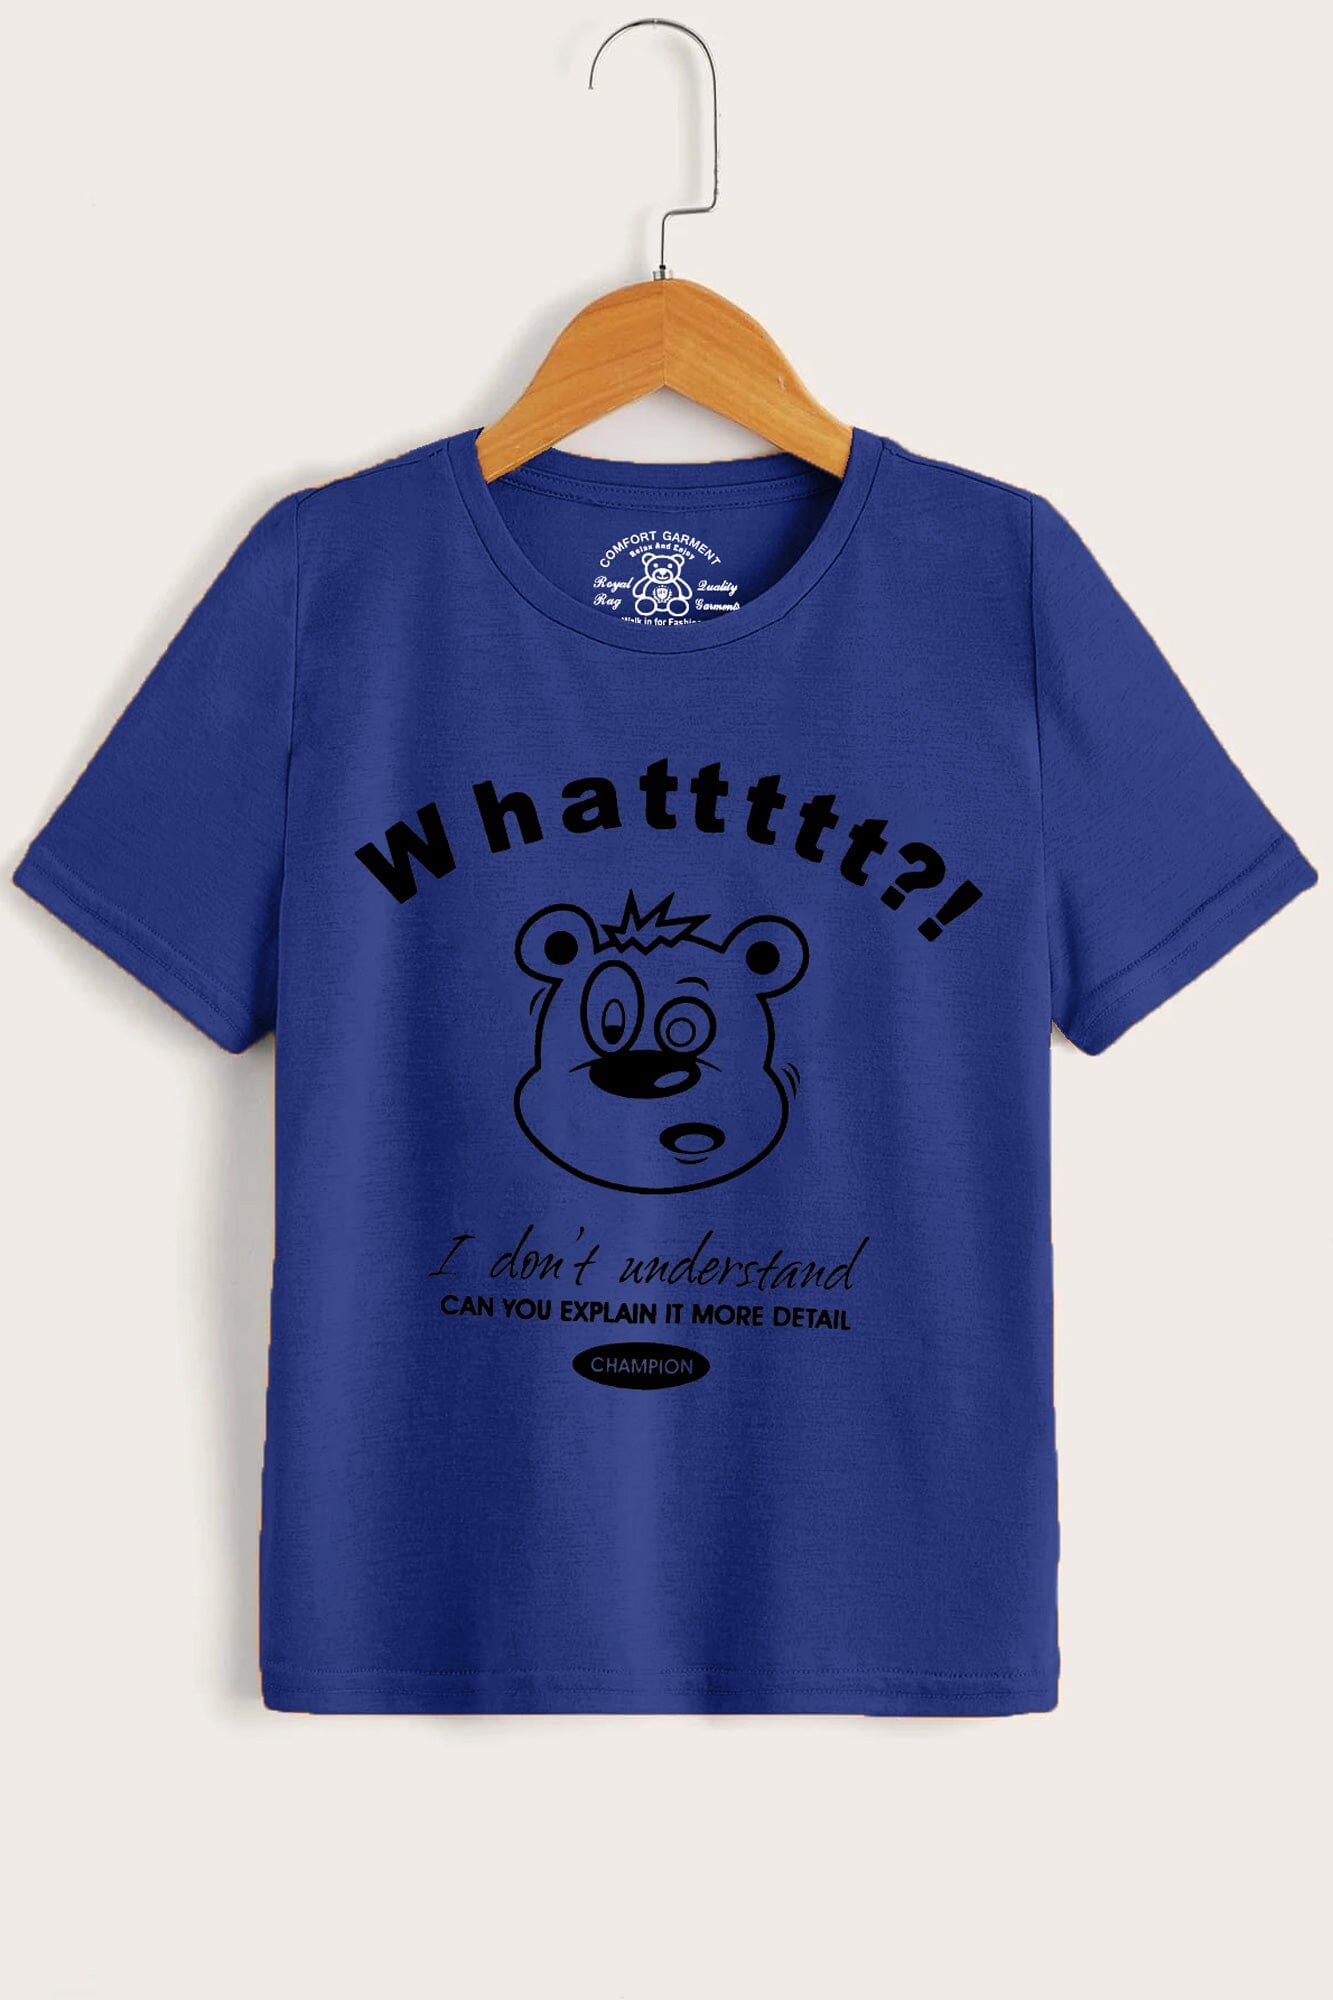 Comfort Kid's Whattt Printed Short Sleeve Tee Shirt Boy's Tee Shirt Usman Traders Royal 2-3 Years 